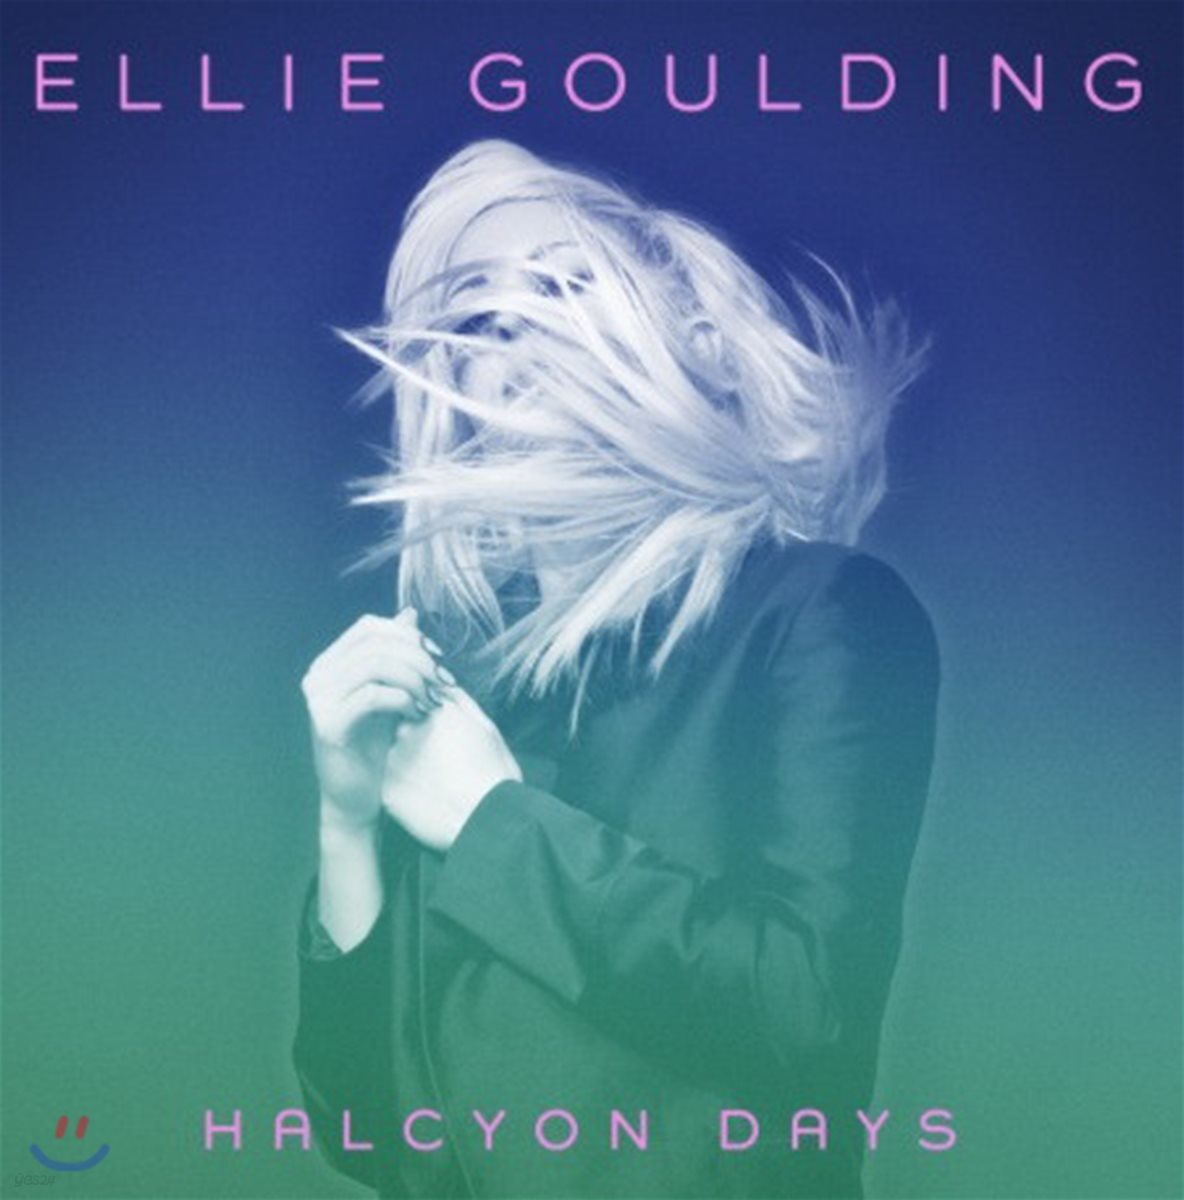 Ellie Goulding - Halcyon Days (Deluxe Version)